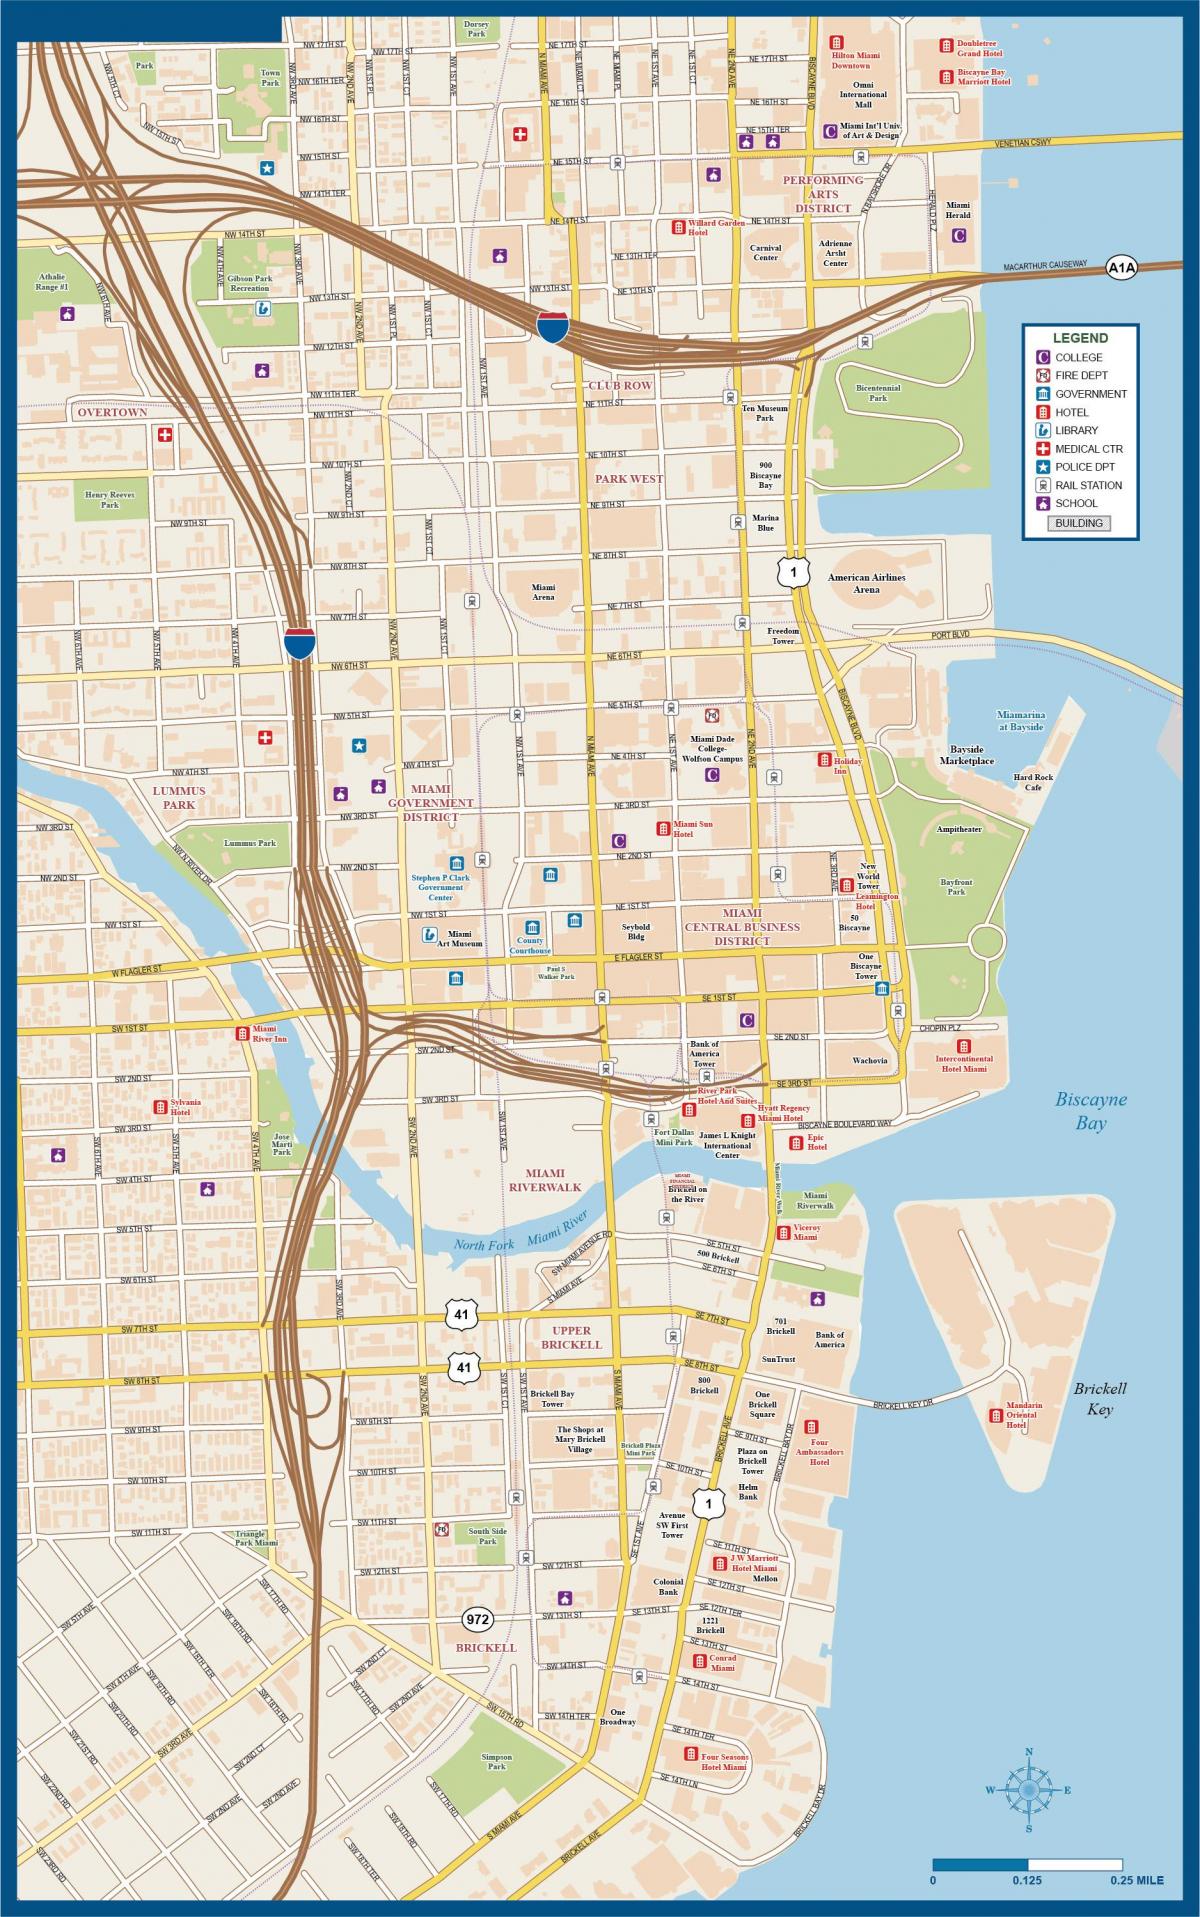 Miami city center map